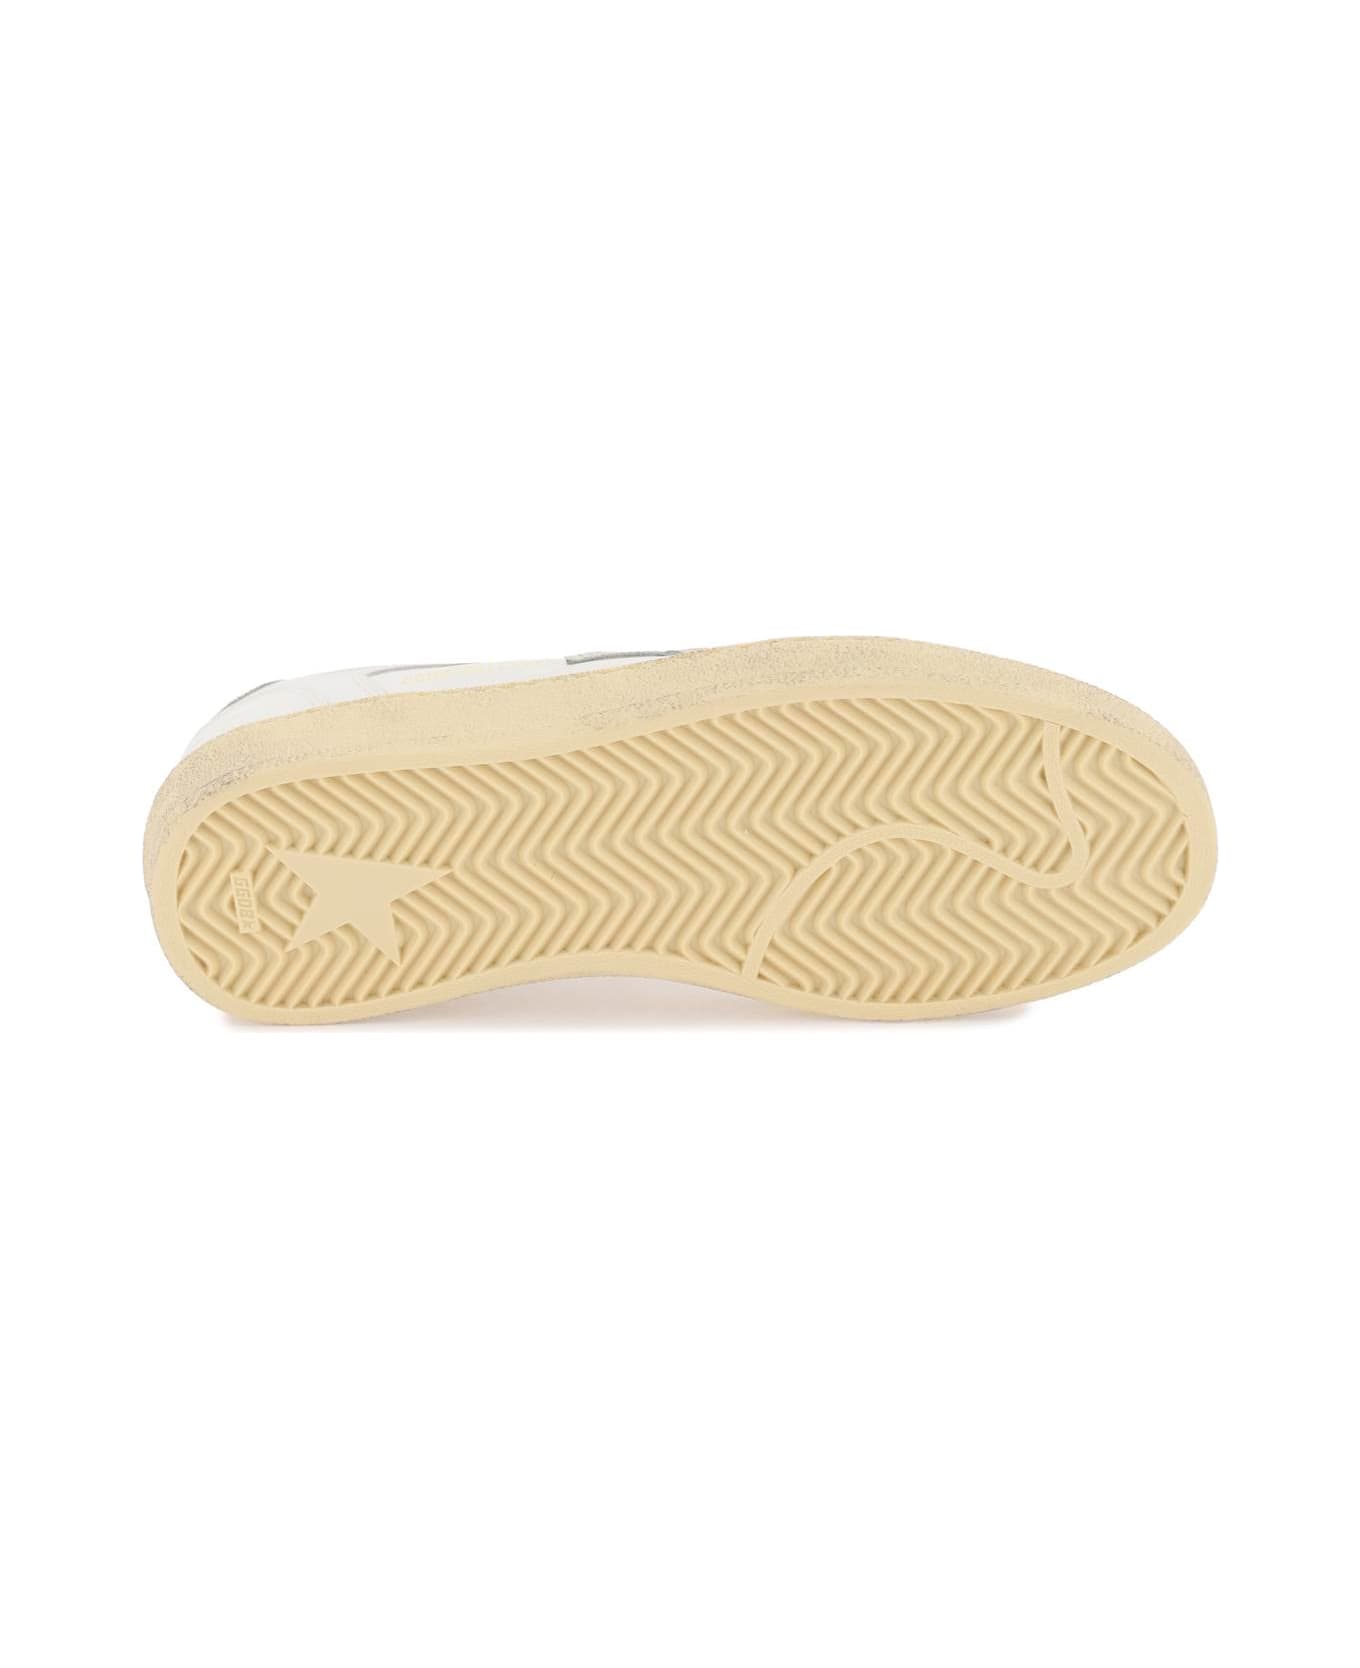 Golden Goose Ball Star Sneakers - WHITE ICE SILVER (White)